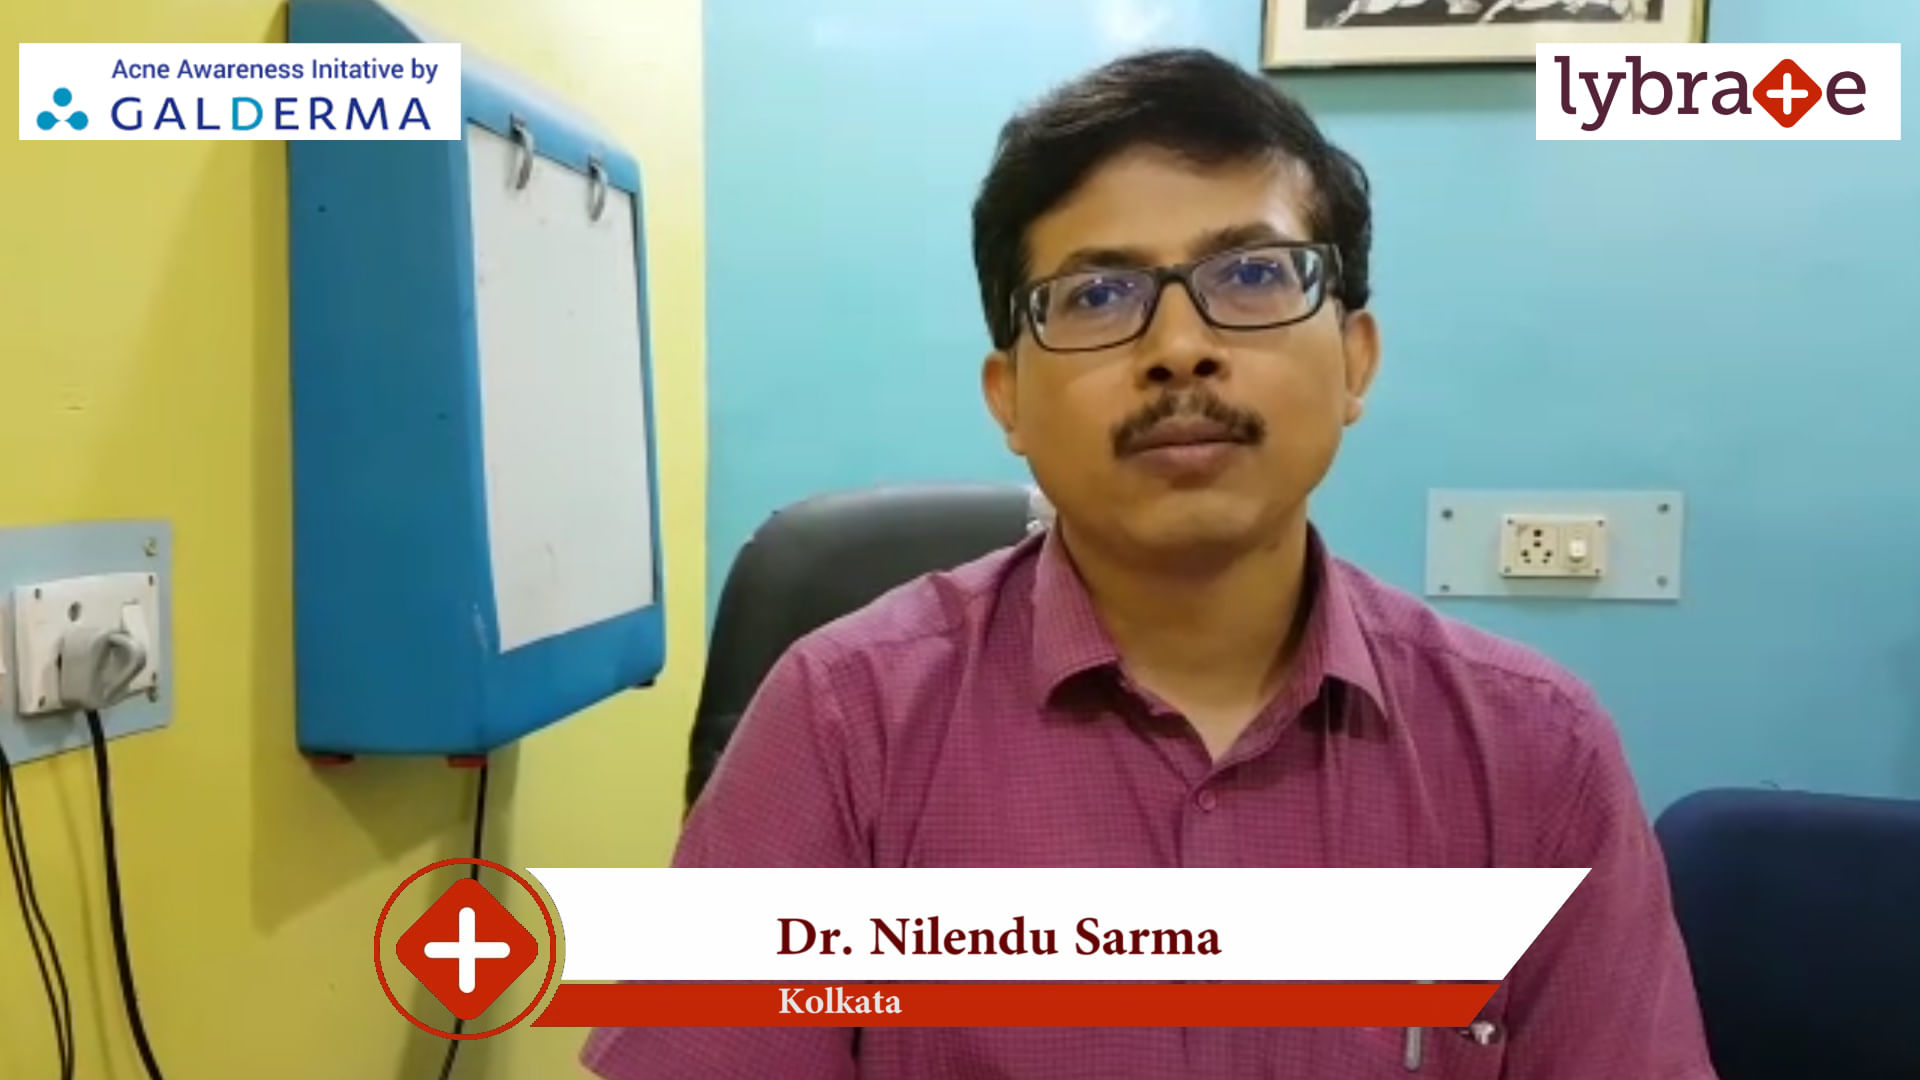 Lybrate | Dr. Nilendu Sarma speaks on IMPORTANCE OF TREATING ACNE EARLY